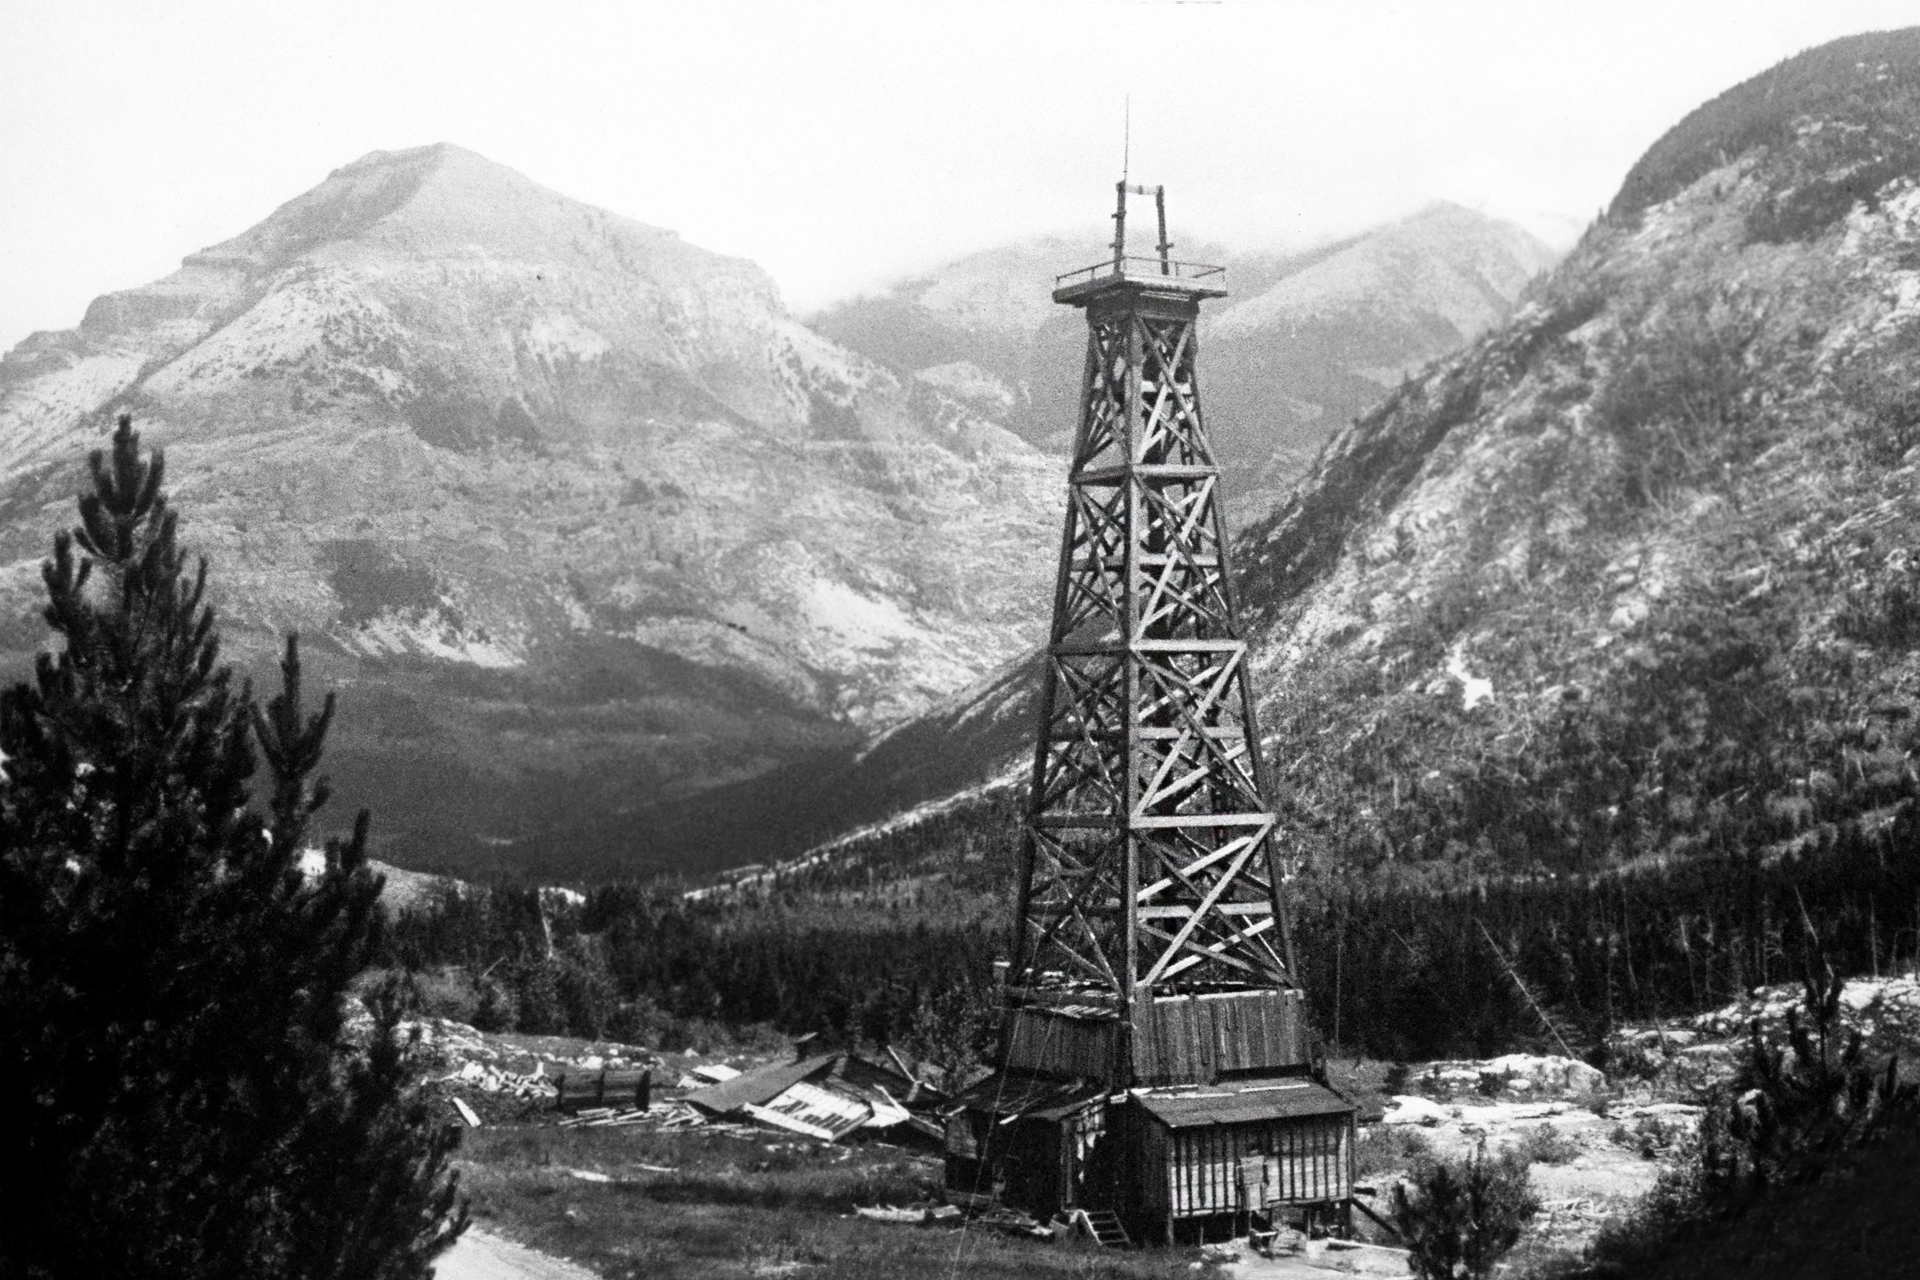 Alberta's first oil well